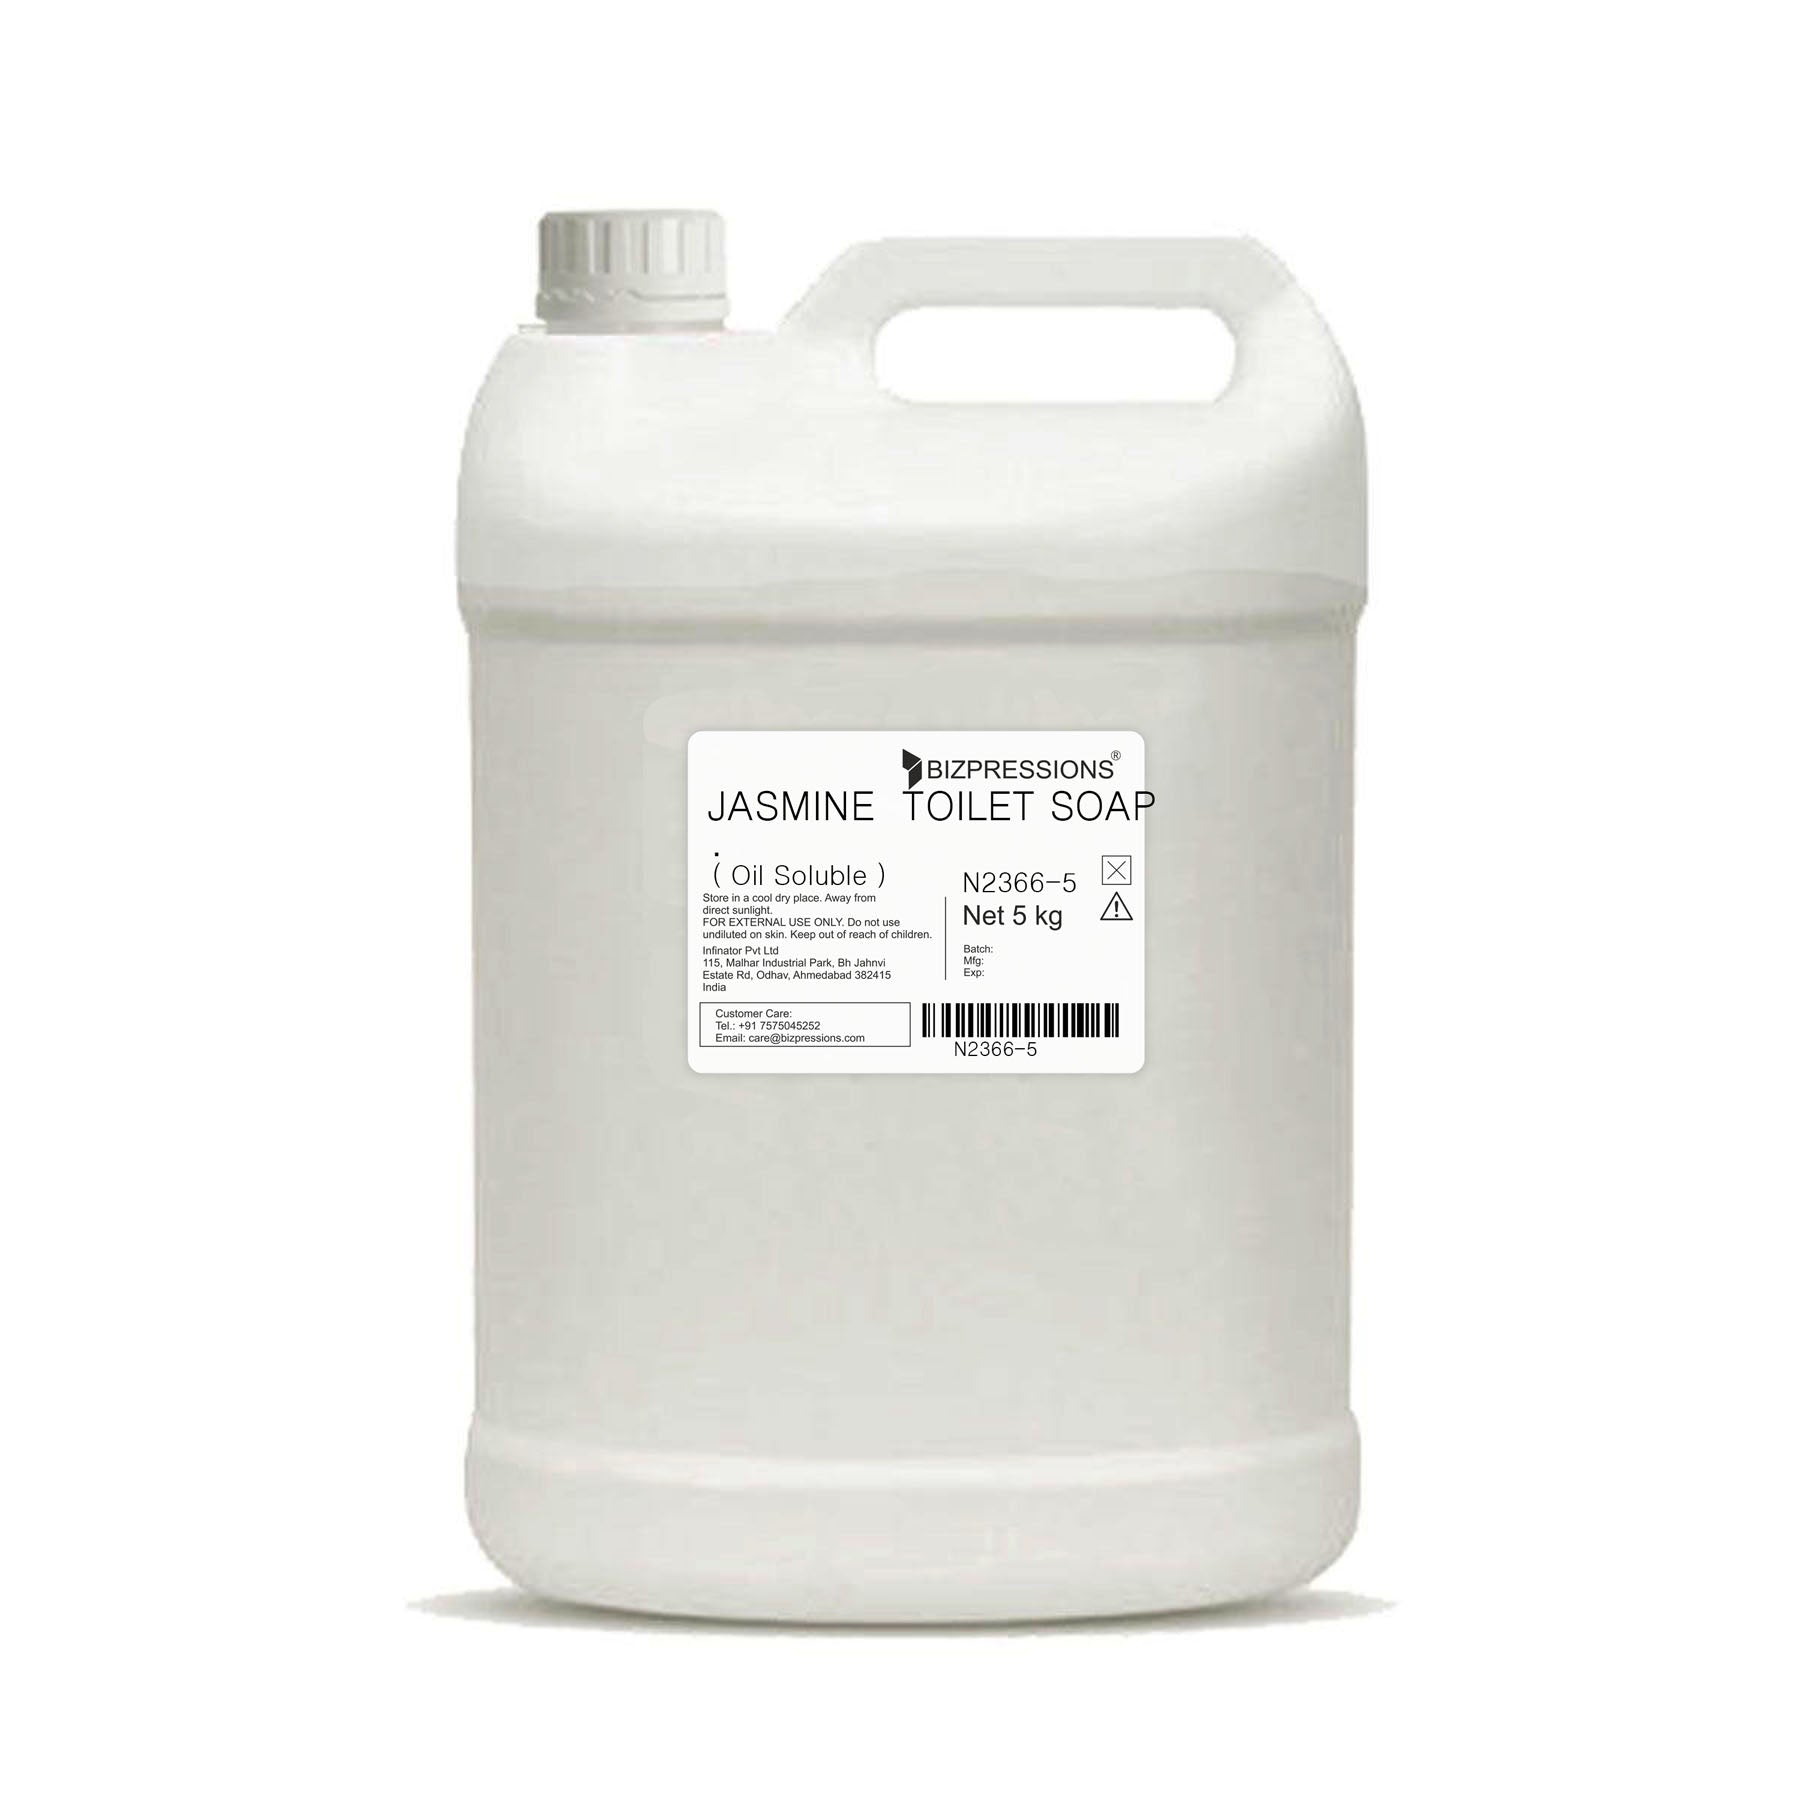 JASMINE TOILET Soap - Fragrance ( Oil Soluble ) - 5 kg